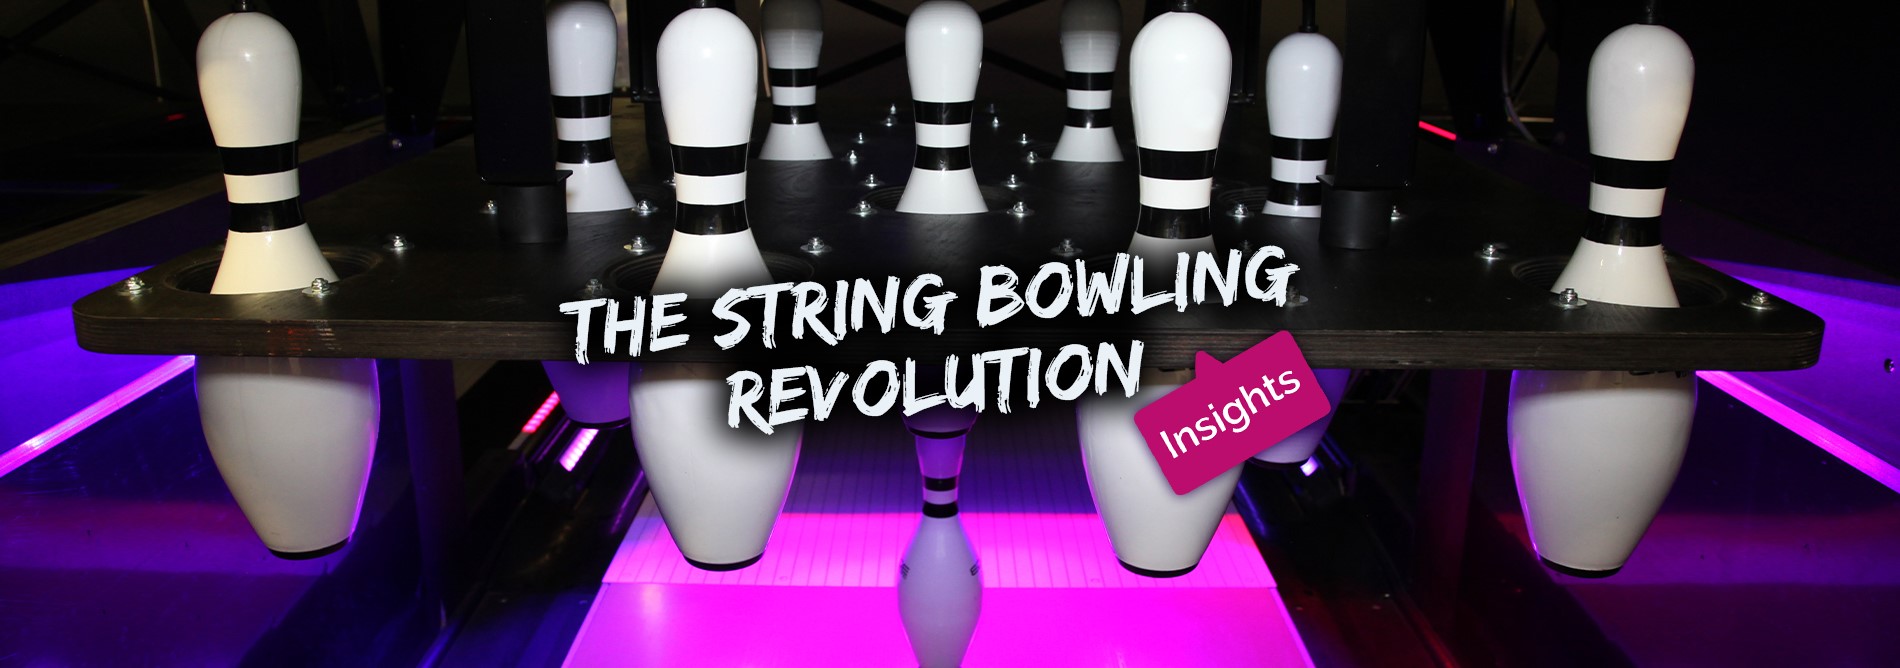 Bowling-QubicaAMF-edge-string-BLOG-banner.jpg